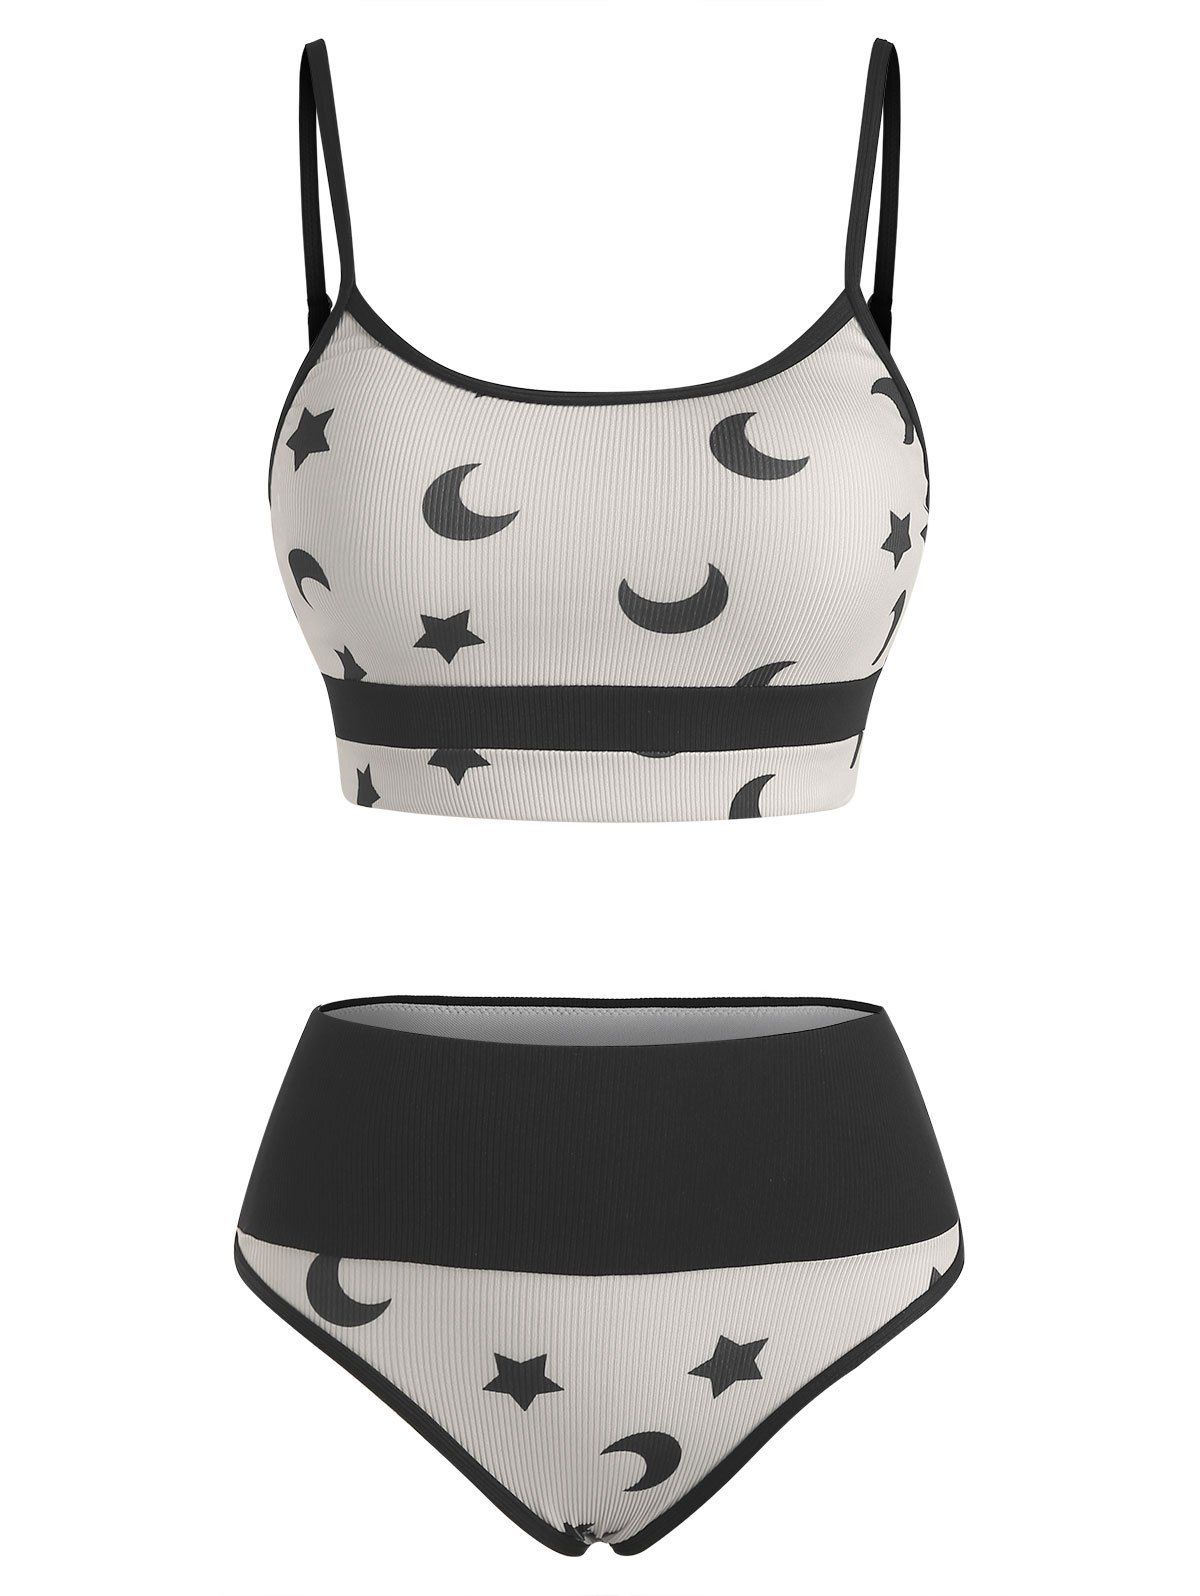 Gothic Ribbed Bikini Swimsuit Moon Star Colorblock Swimwear Set - WHITE S